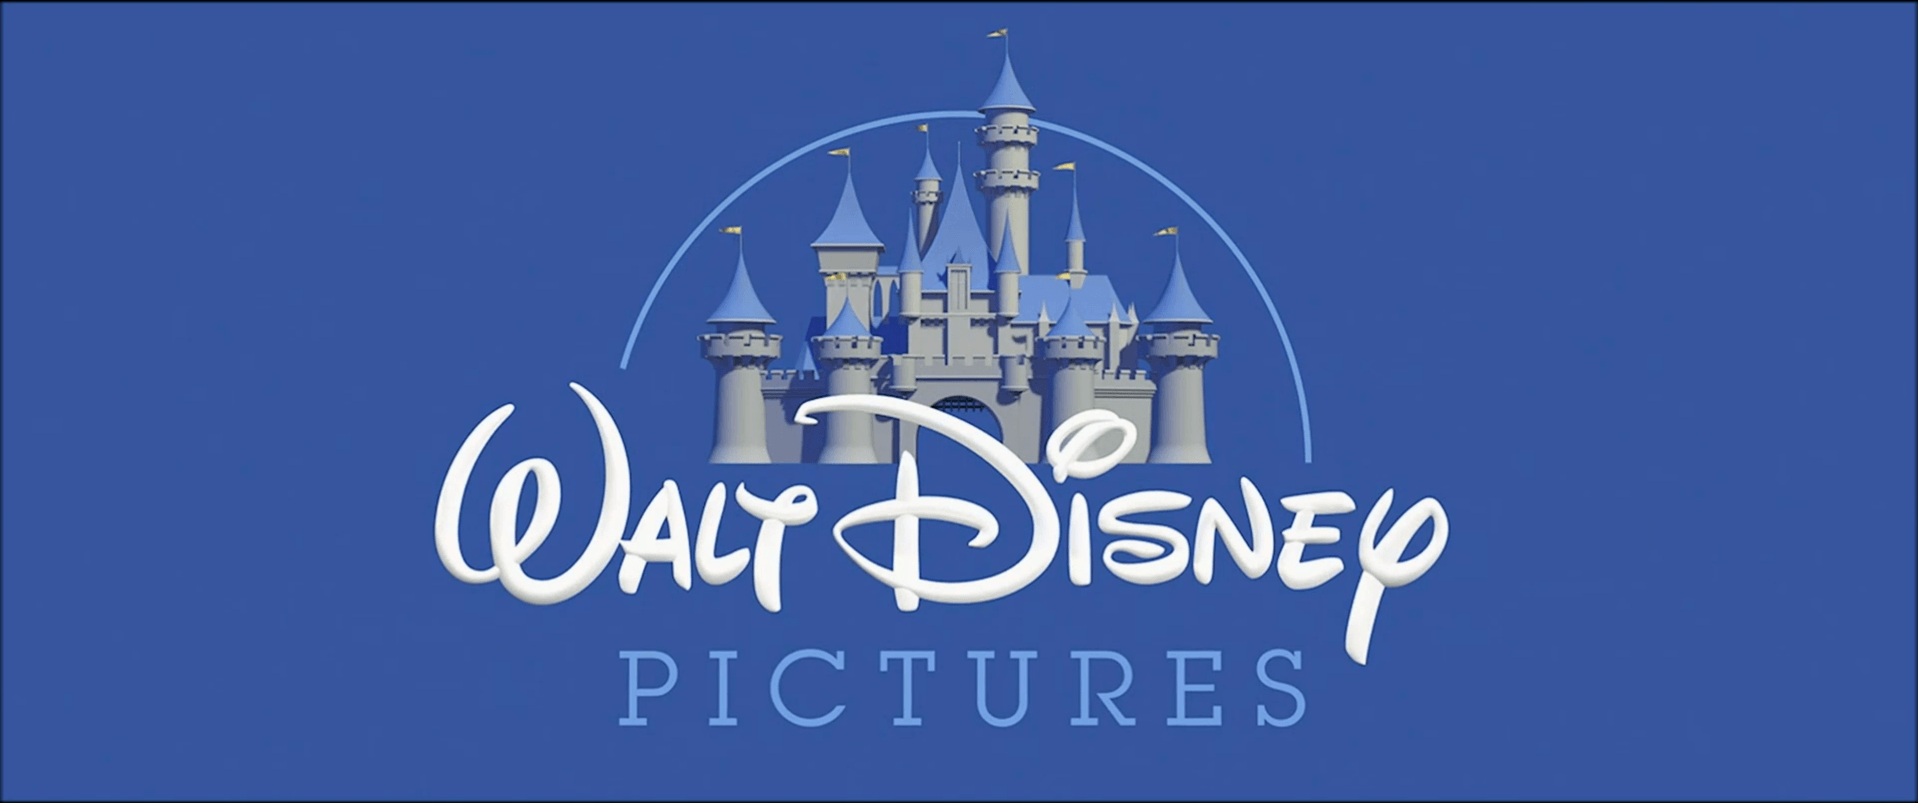 Pixar 2017 Logo - Image - Disney.Pixar(2004).png | Logopedia | FANDOM powered by Wikia